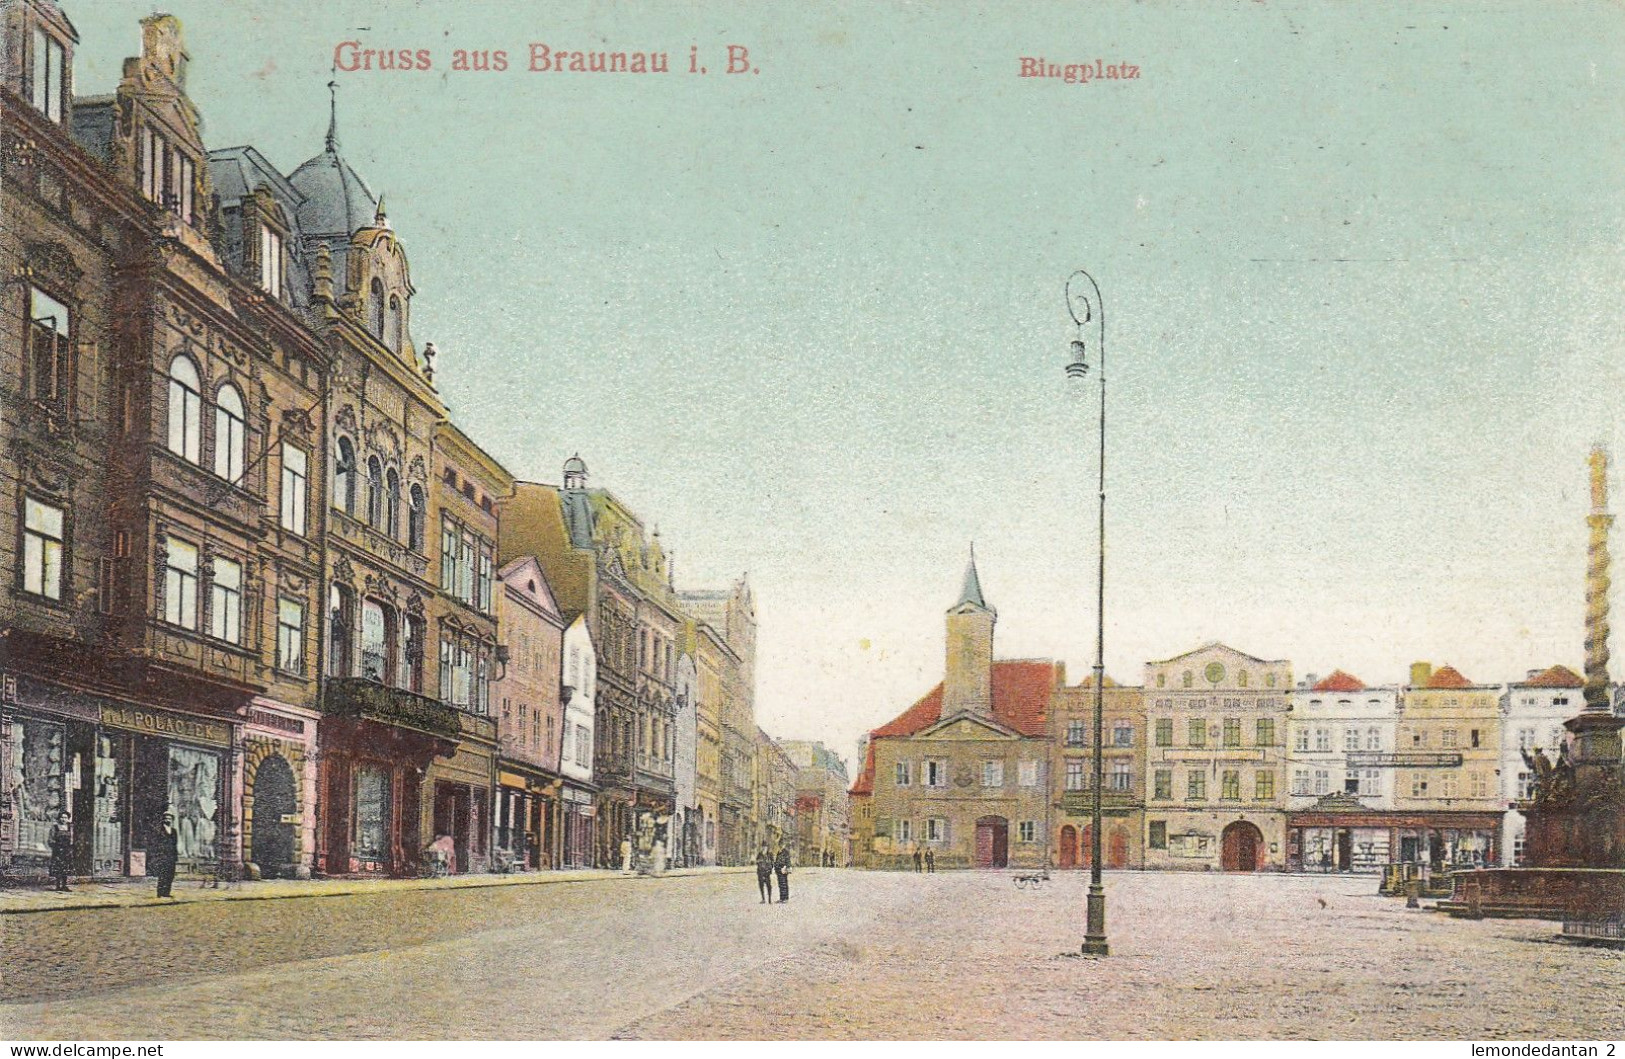 Gruss Aus Braunau I. B. - Ringplatz - Czech Republic